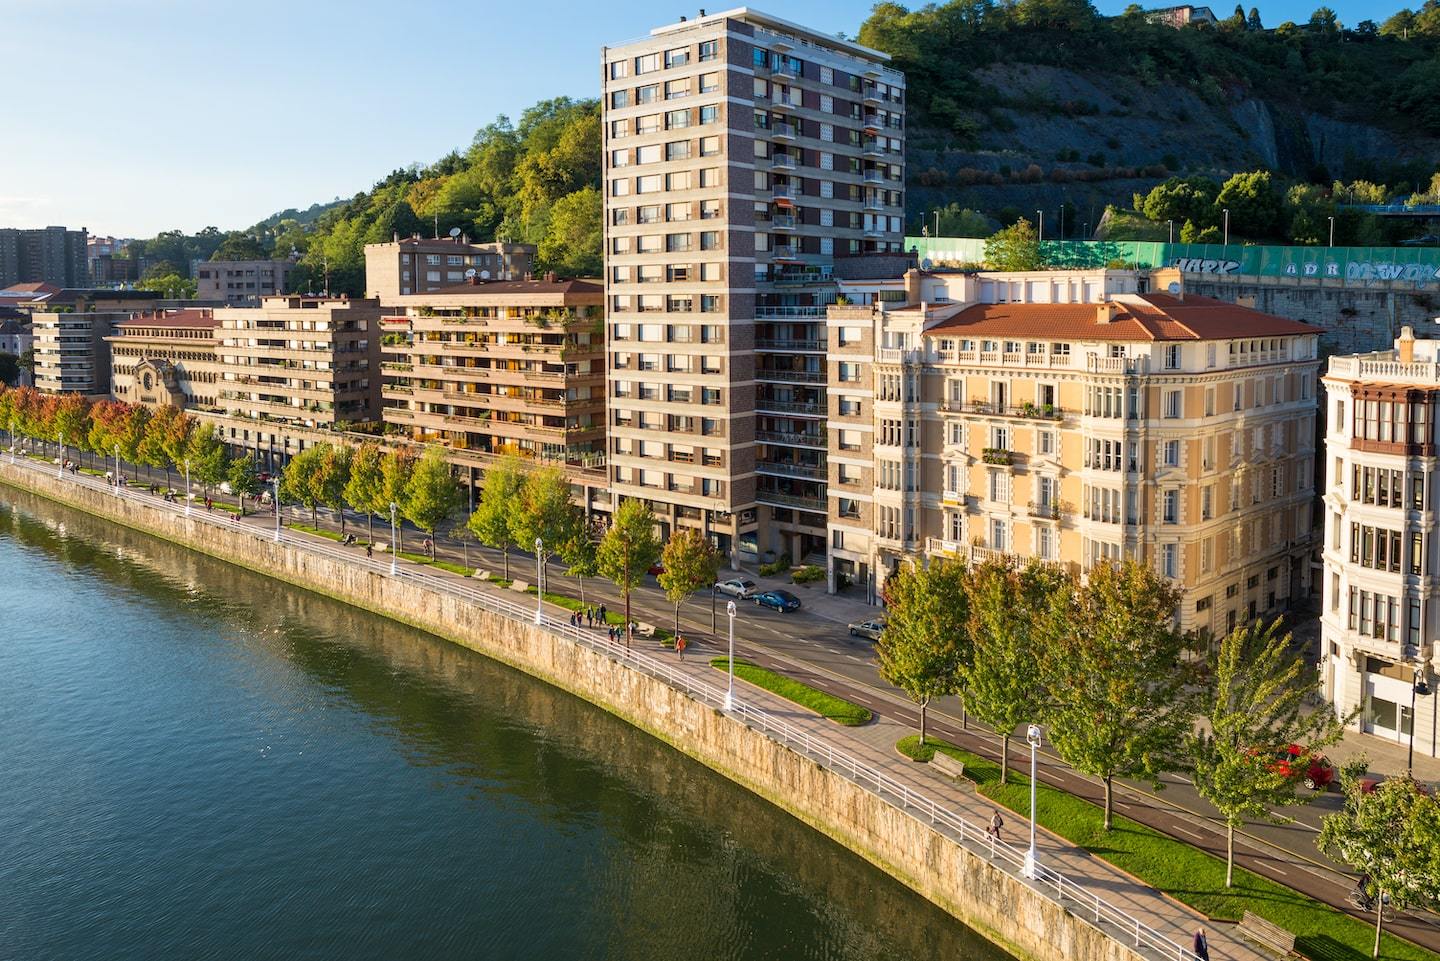 Neighborhood along the river in Bilbao